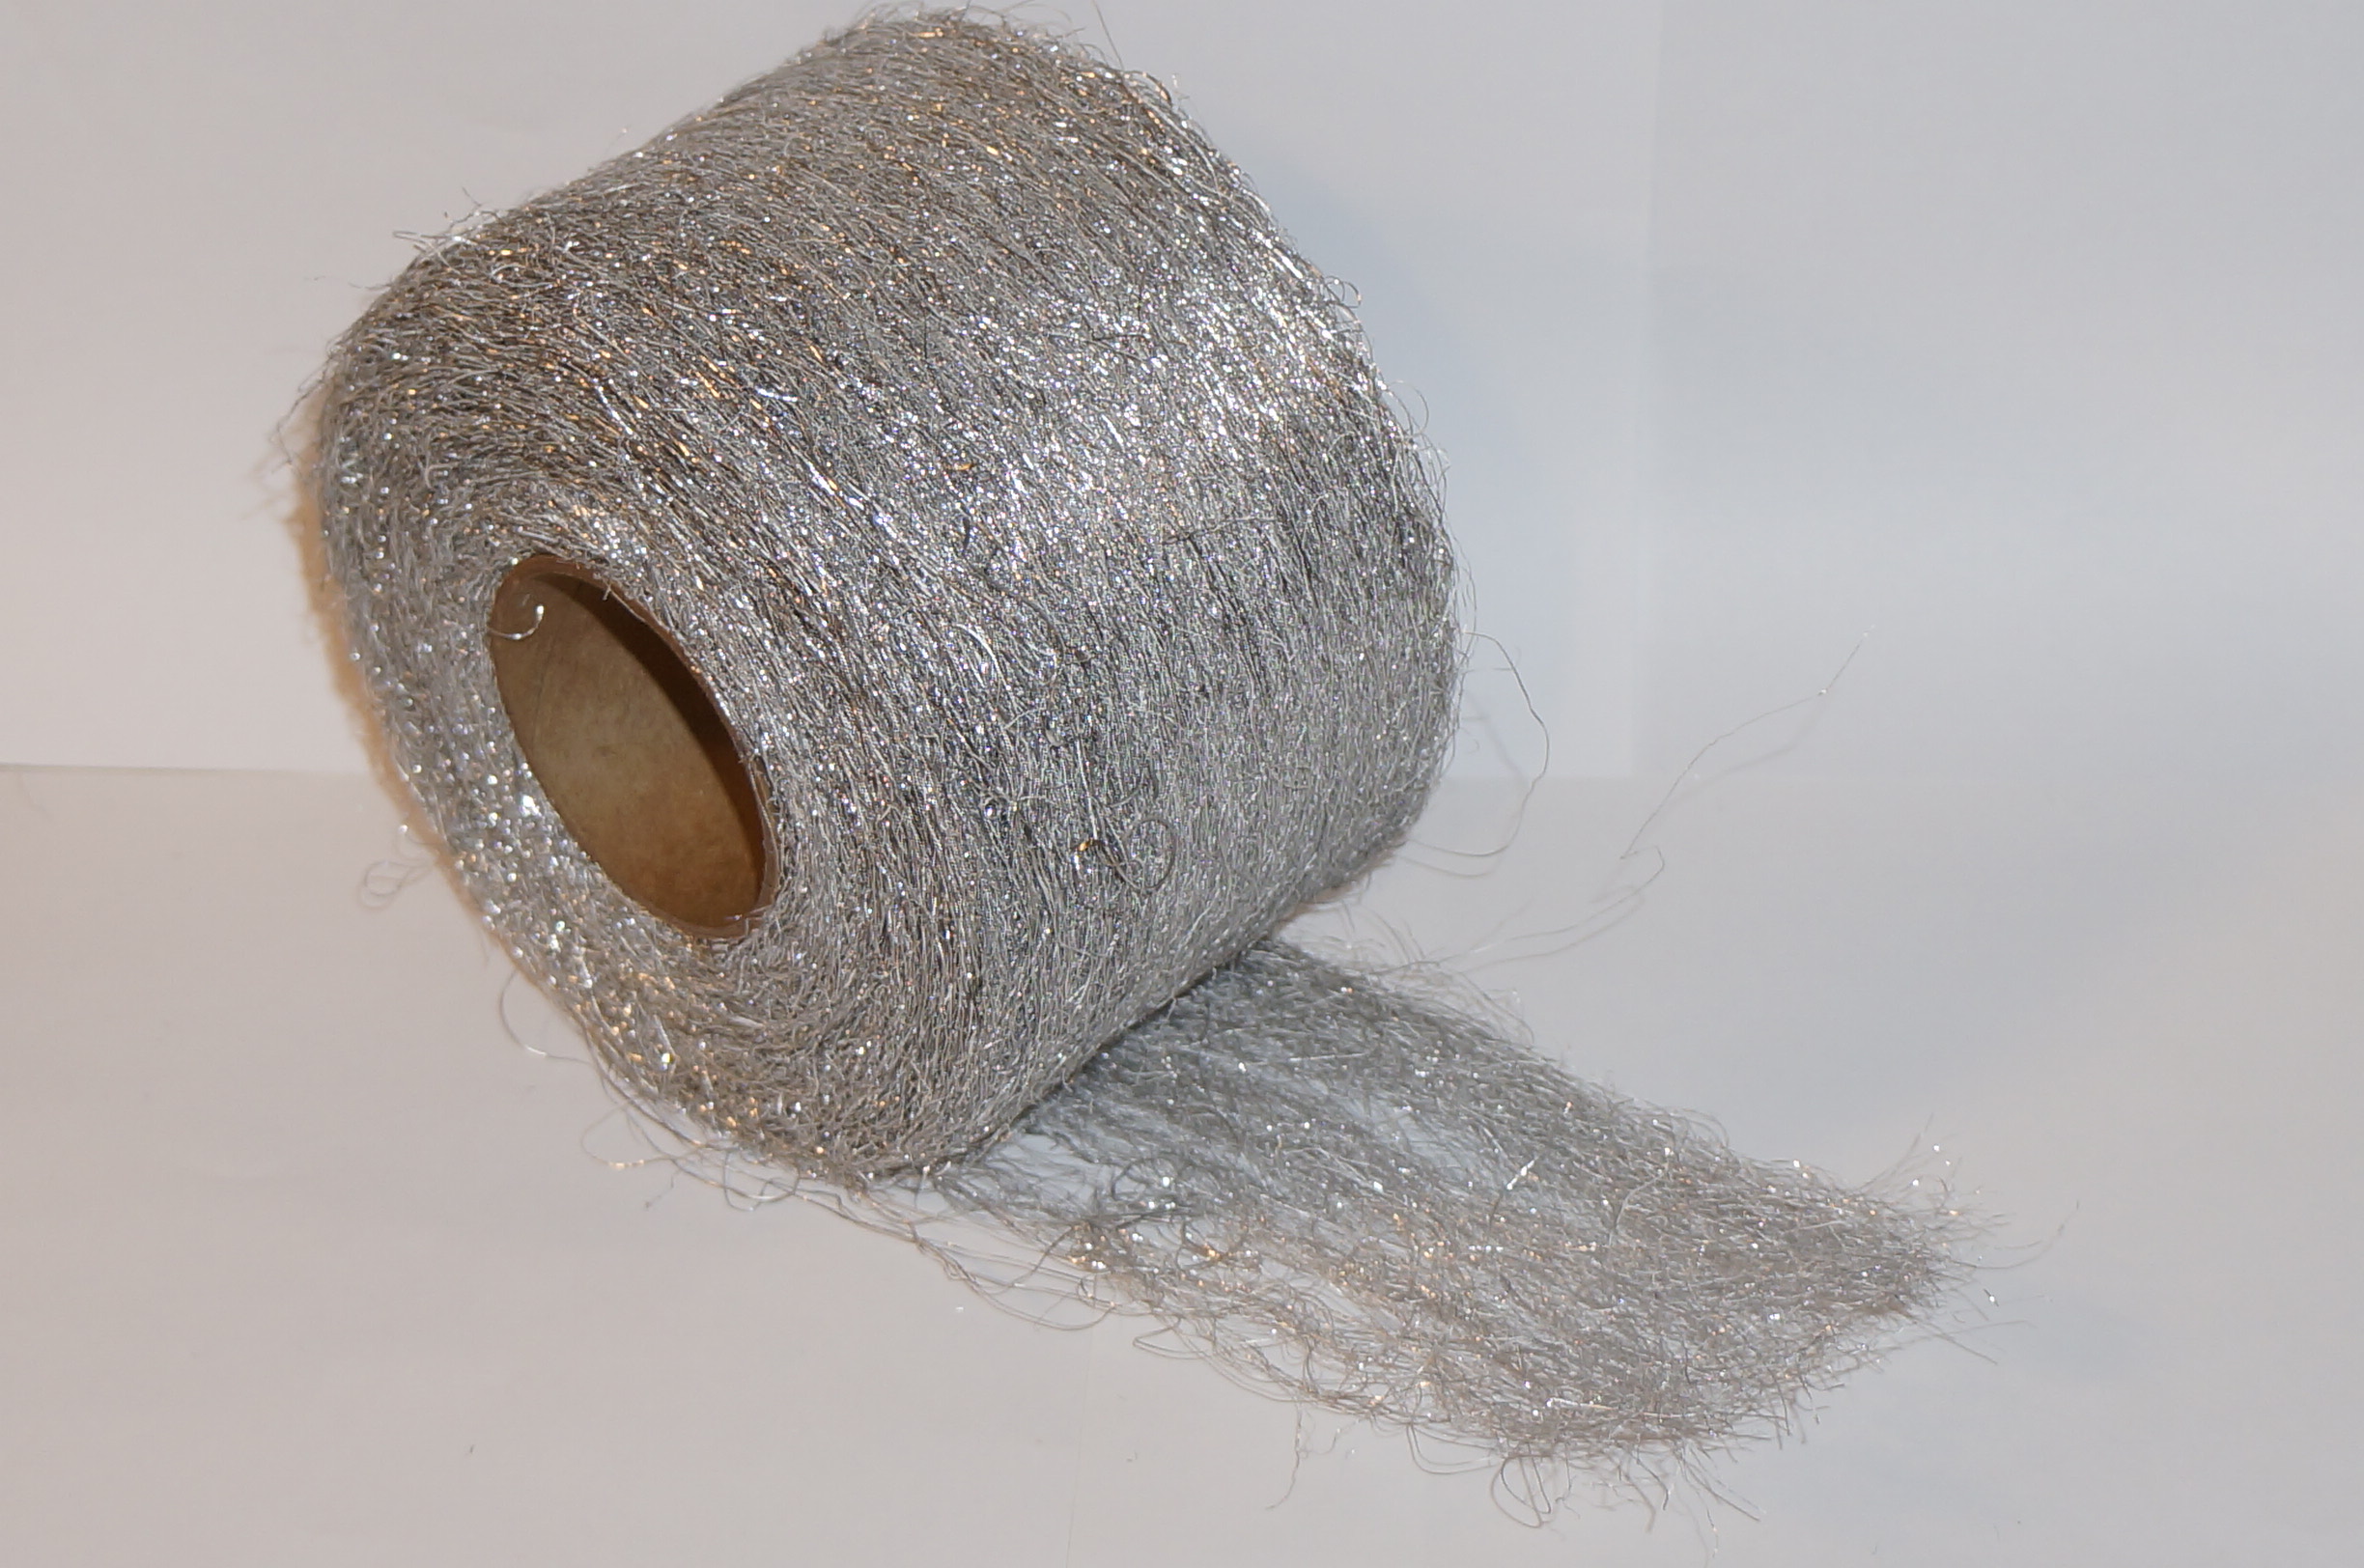  Aluminum Wool (COARSE Grade) - 1lb Roll - by Rogue River Tools.  Soft clean and polish! Pure Aluminum : Industrial & Scientific